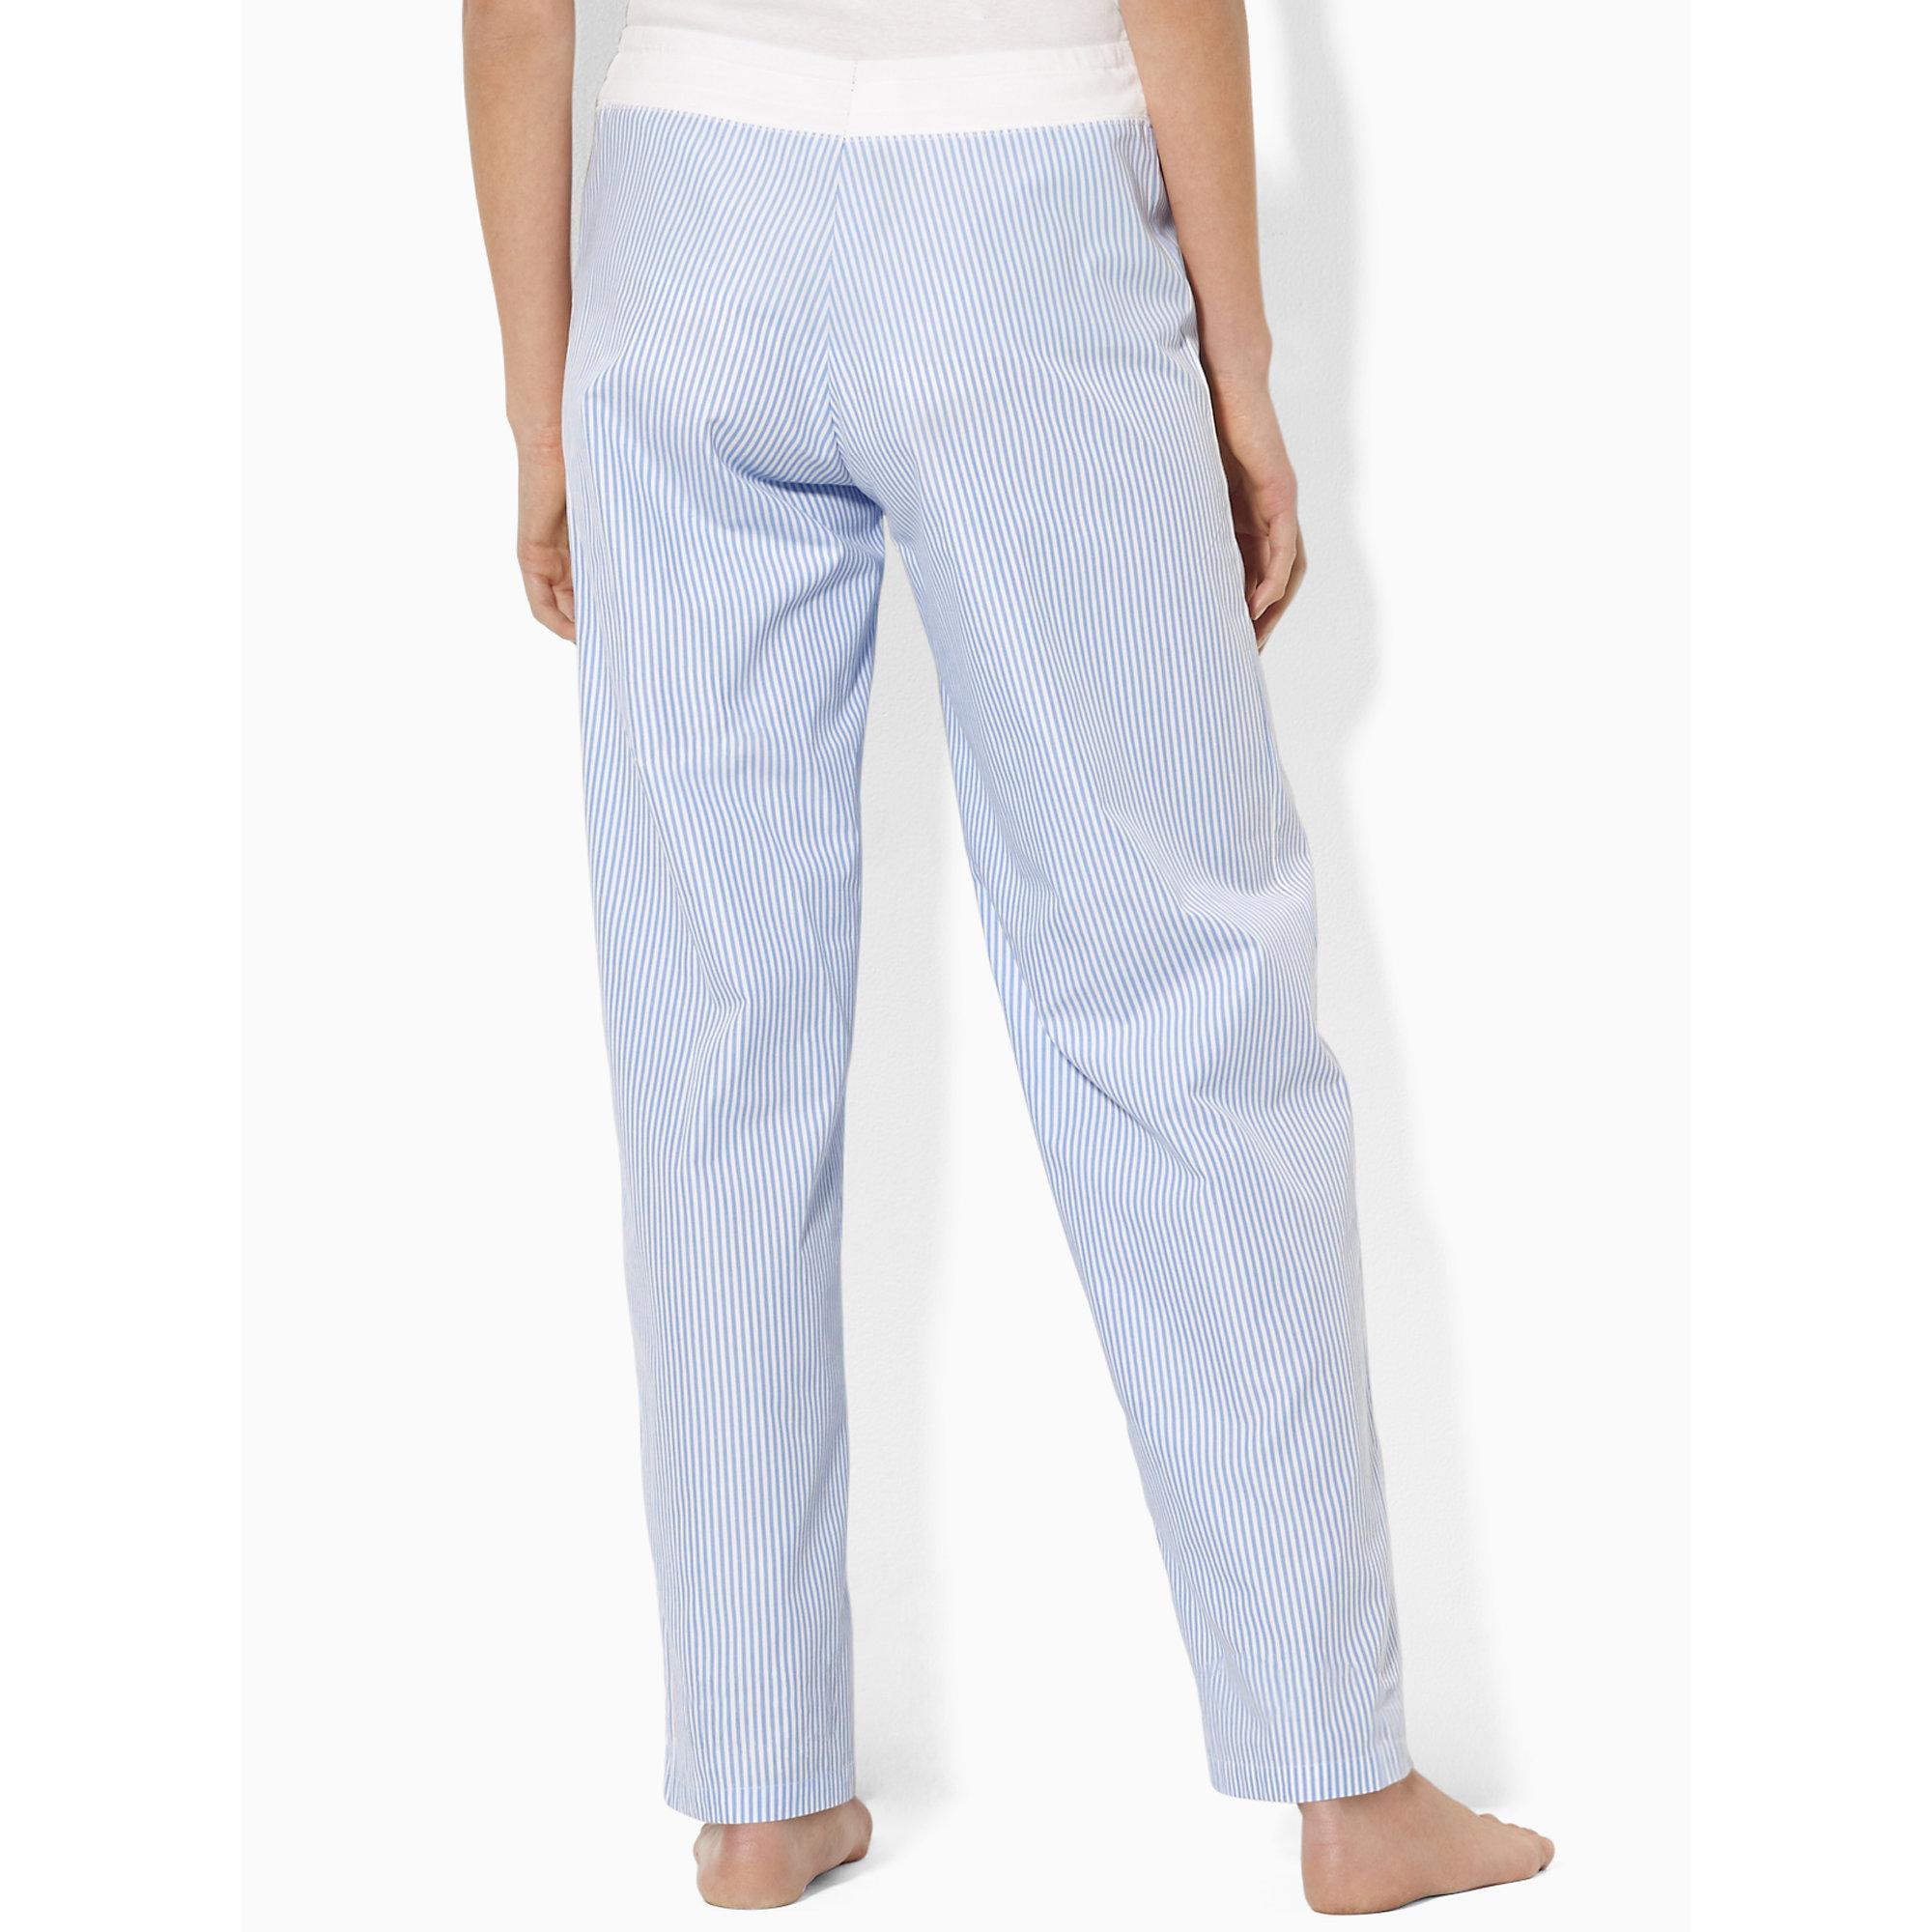 Ralph Lauren Cotton Poplin Pajama Pant in French Blue/White Stripe ...